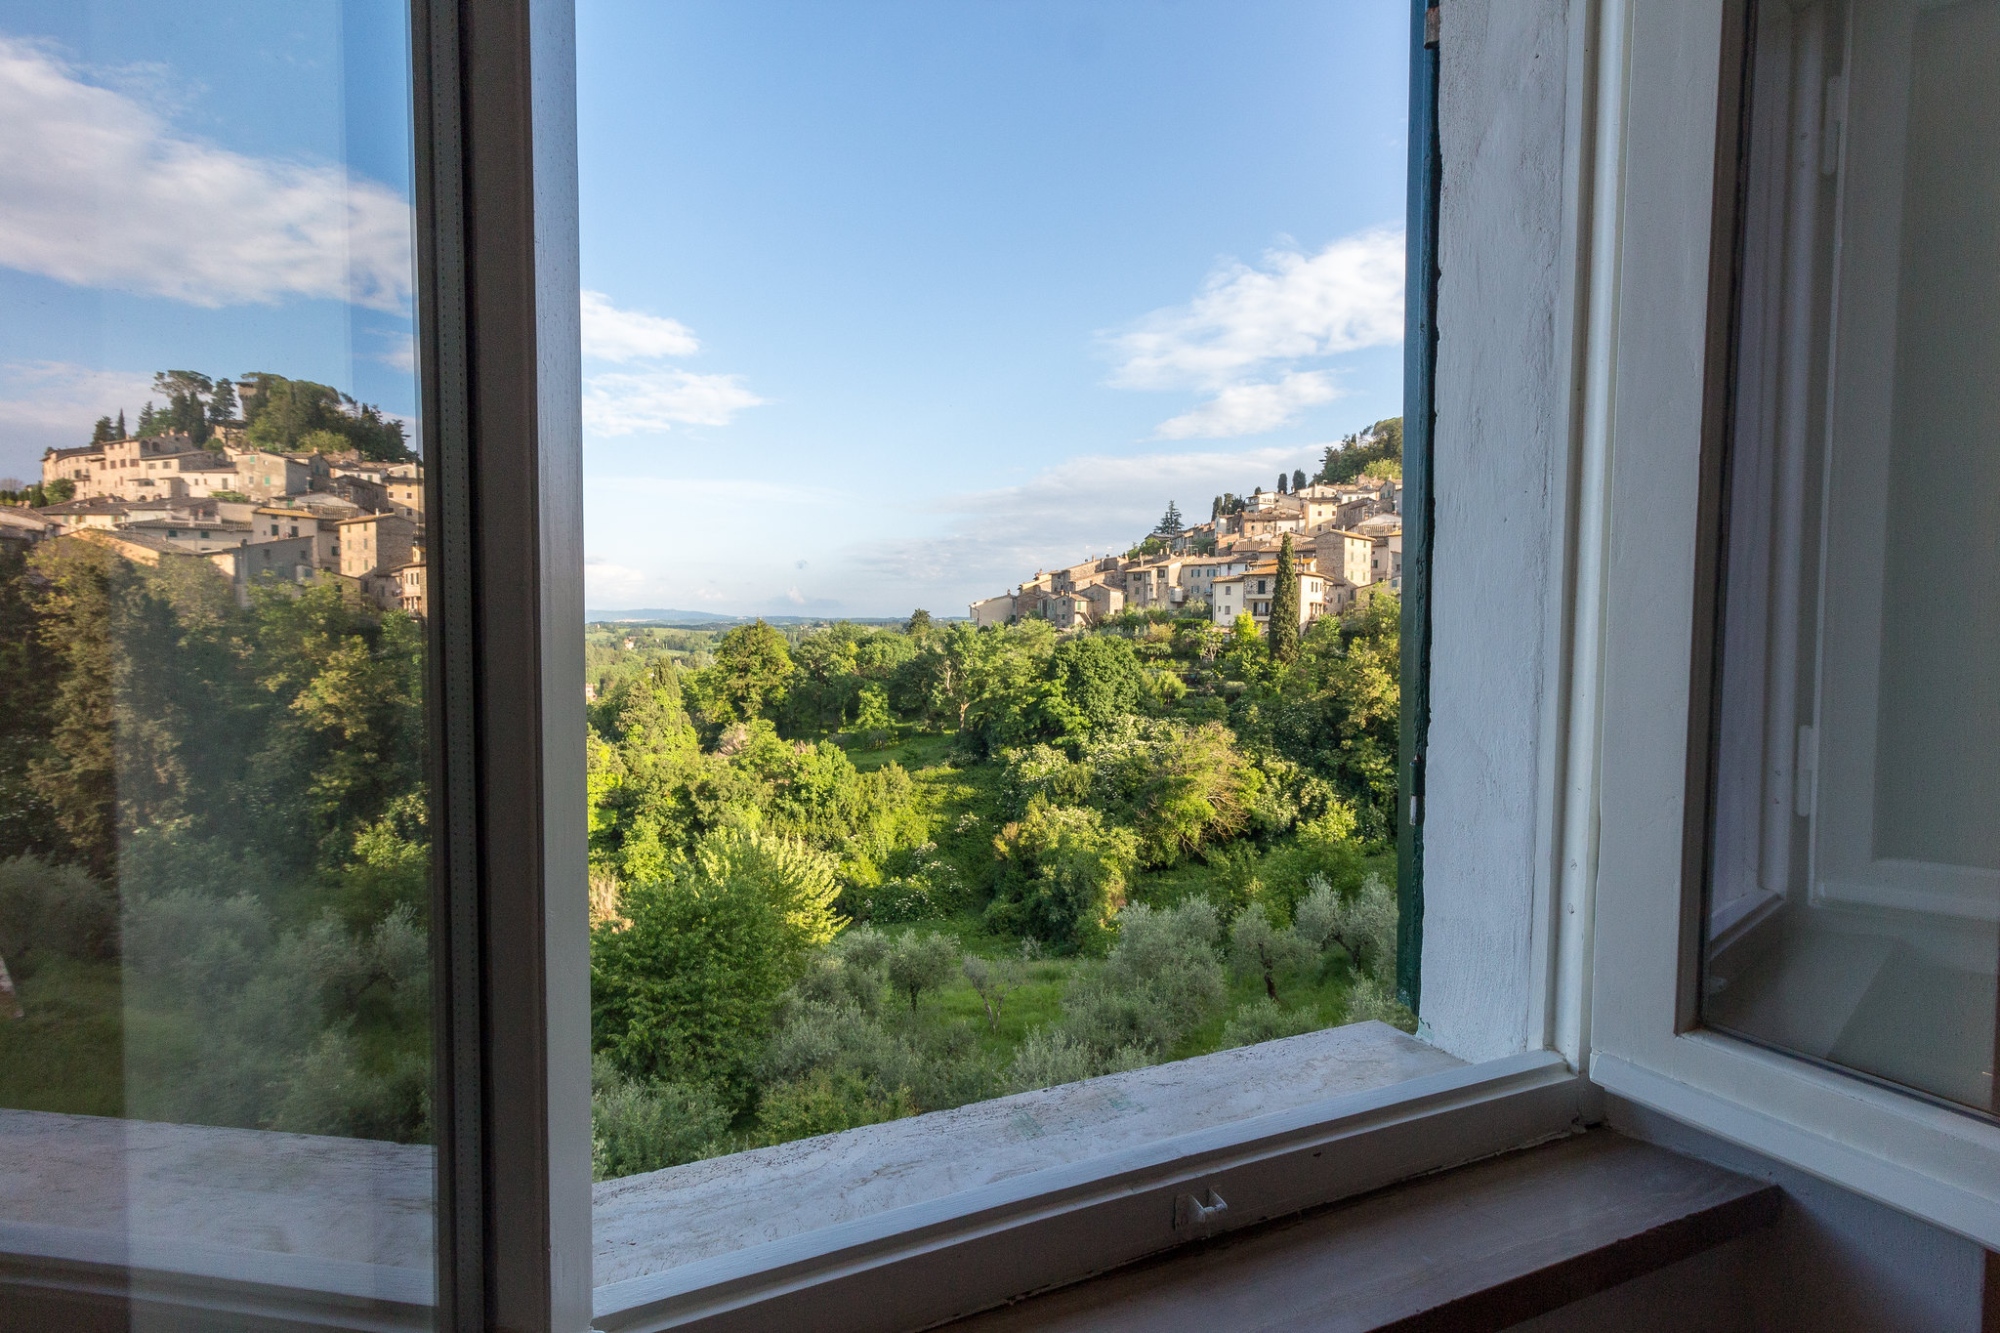 La Toscana vista dalla finestra di casa